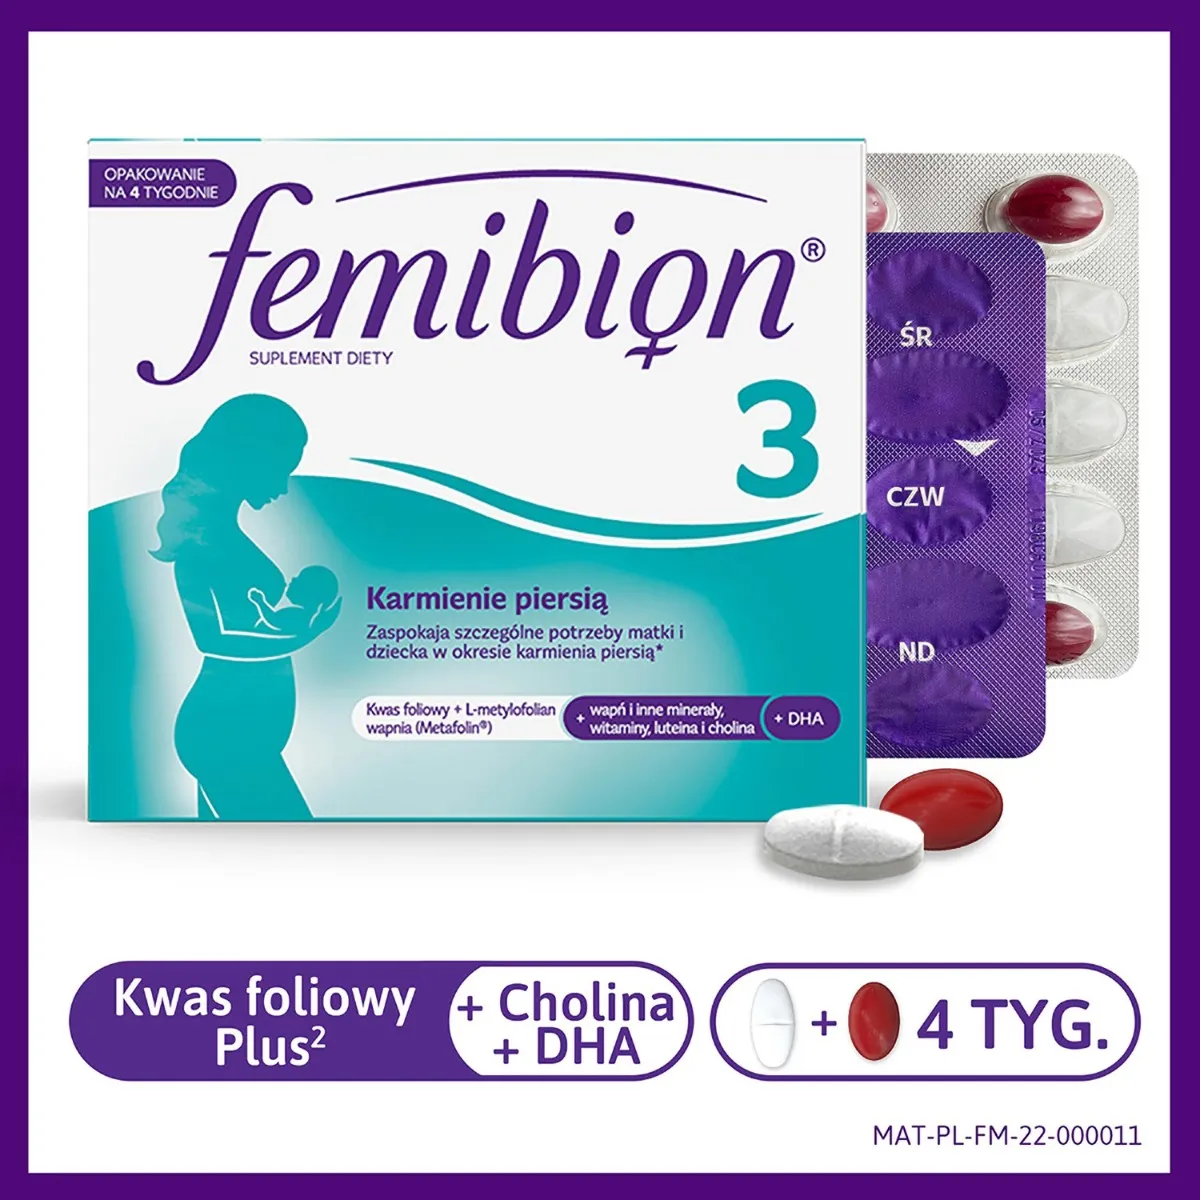 Femibion 3 Karmienie Piersią, suplement diety, 28 tabletek + 28 kapsułek 